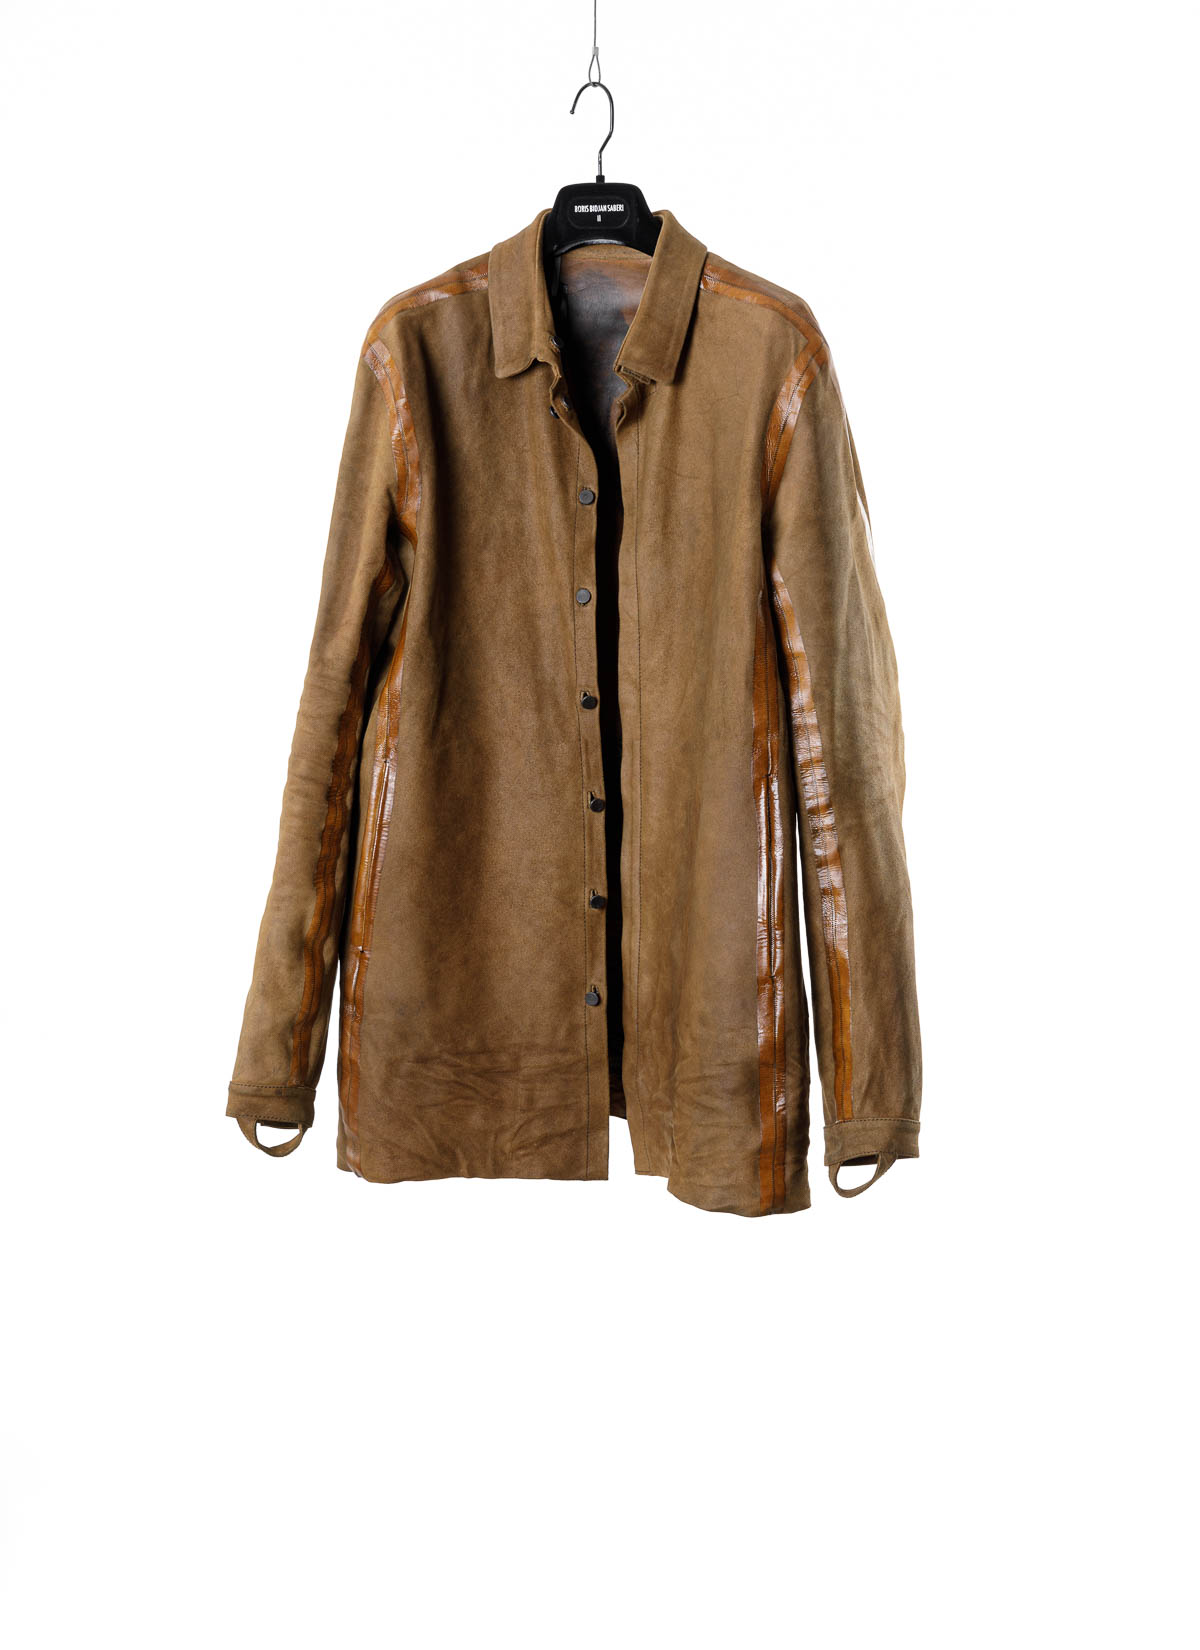 SABERI BIDJAN | Shirt horse Jacket hide-m SHIRT5, leather gum BORIS